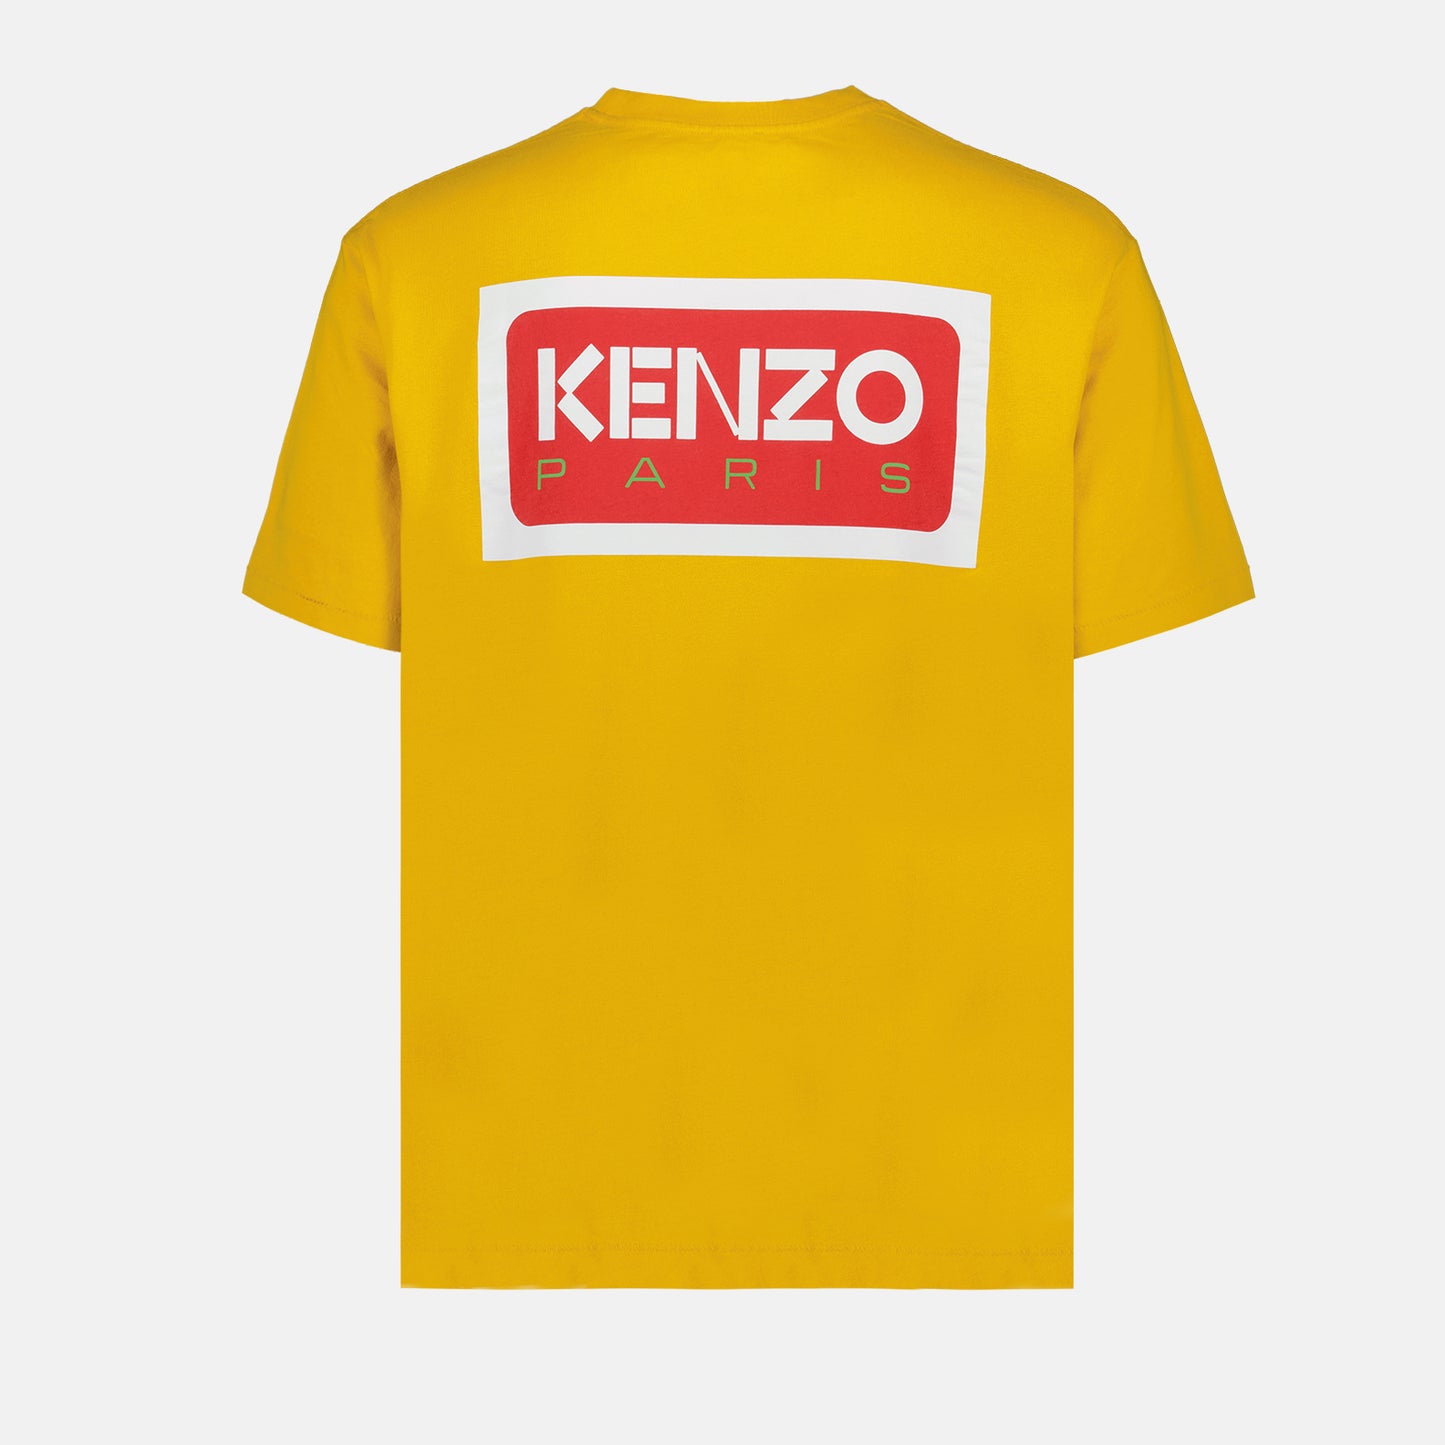 Kenzo Paris oversized t-shirt